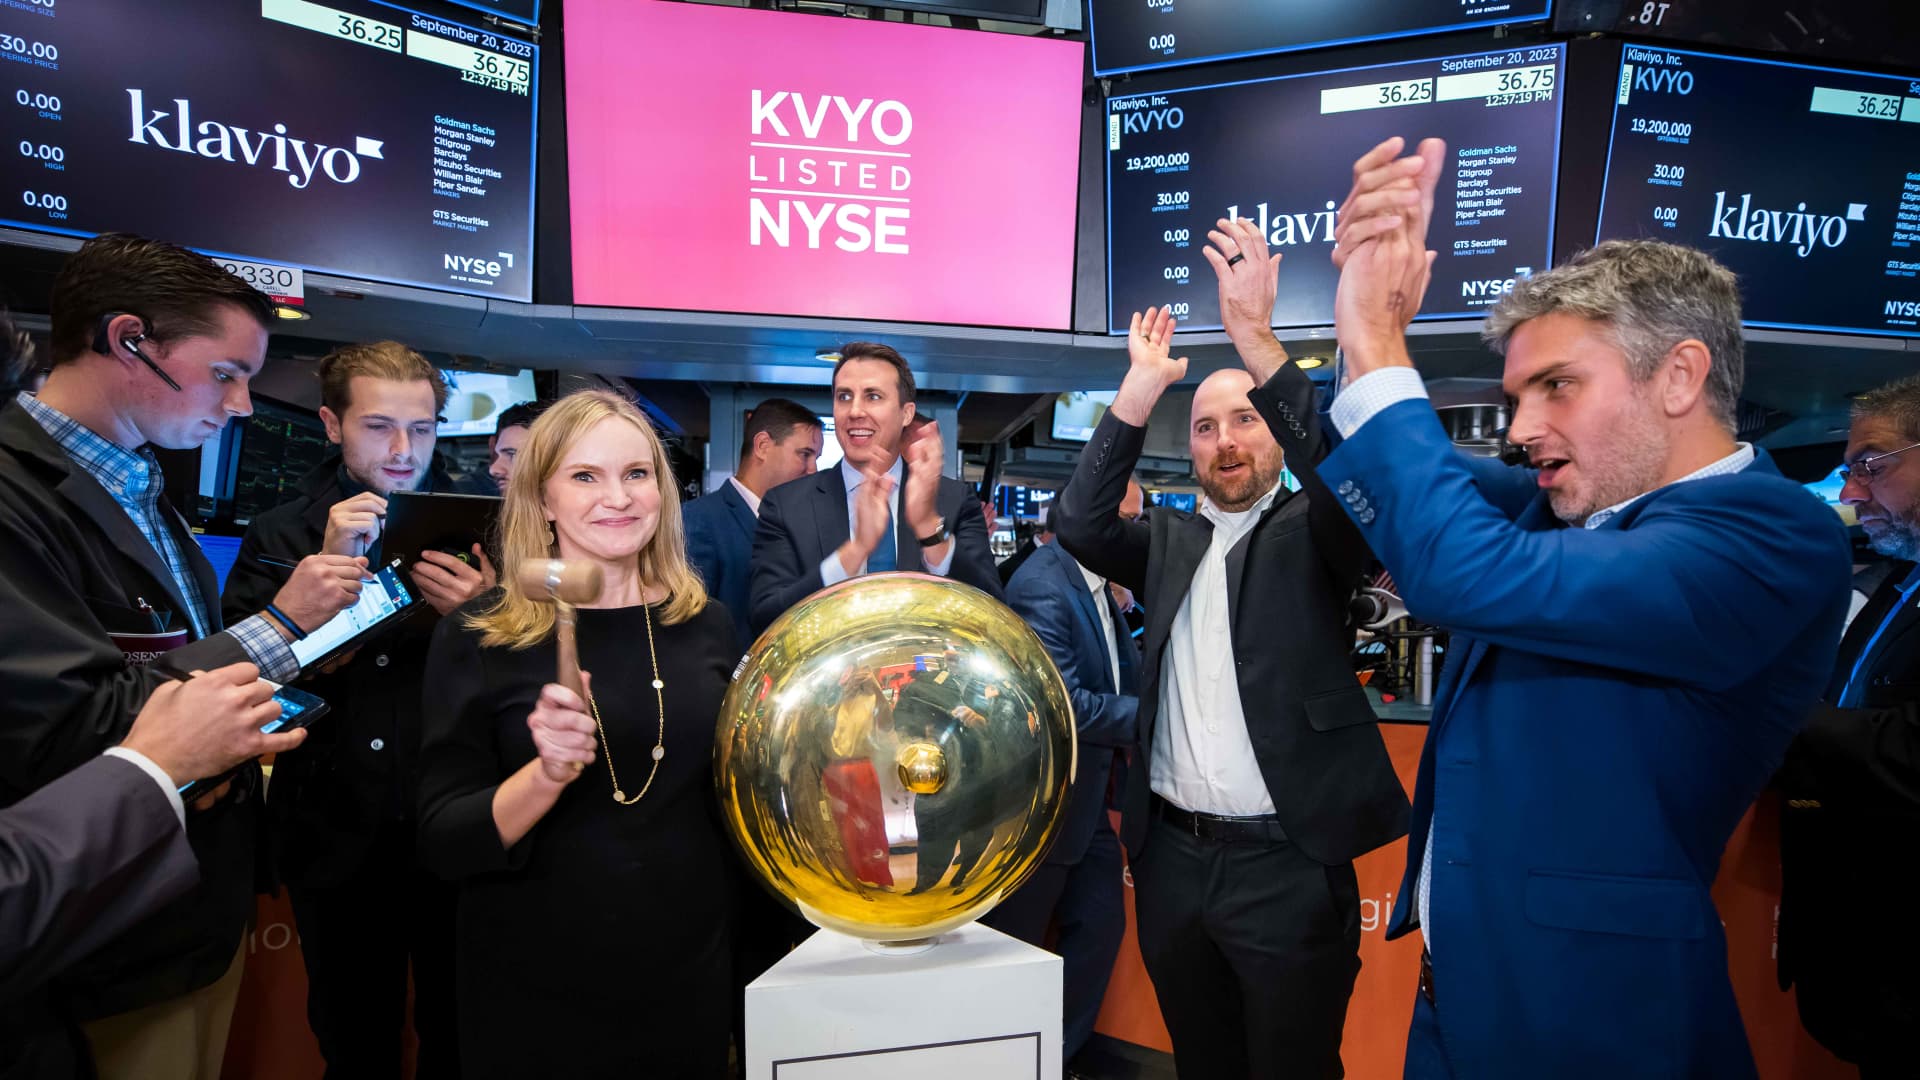 Klaviyo jumps 23% in NYSE debut after software vendor priced IPO at 